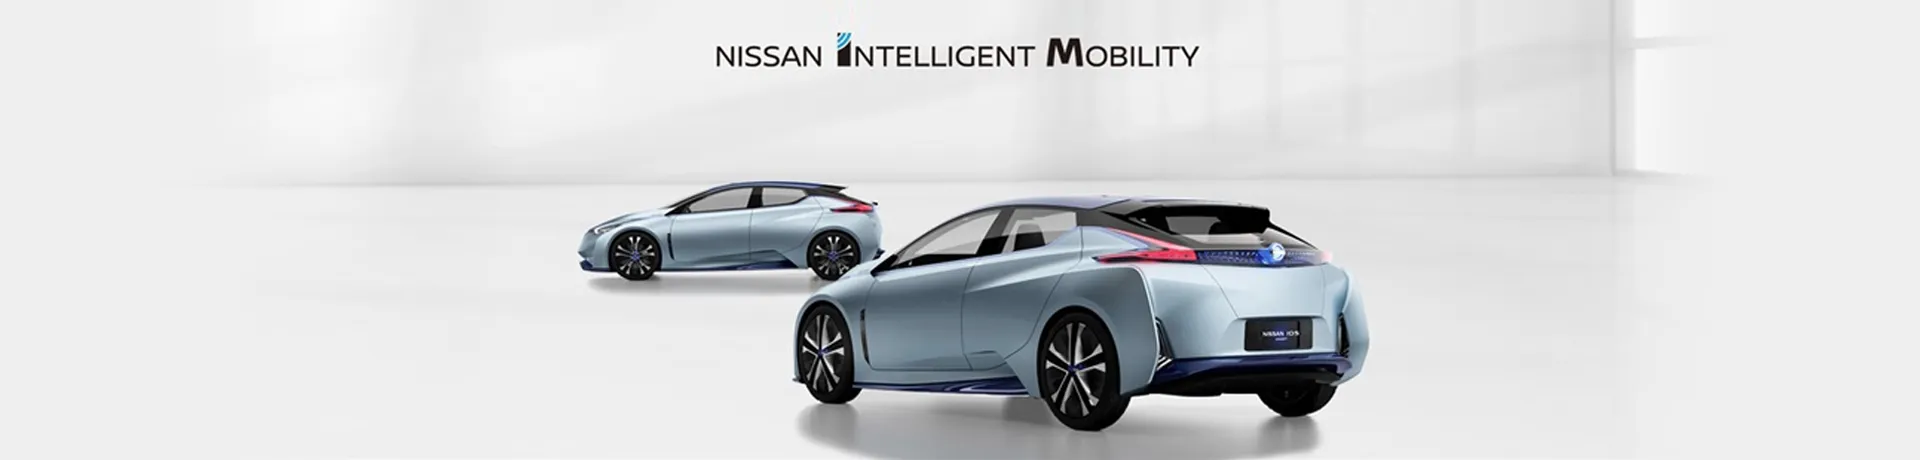 Nissan-Intelligent-Mobility